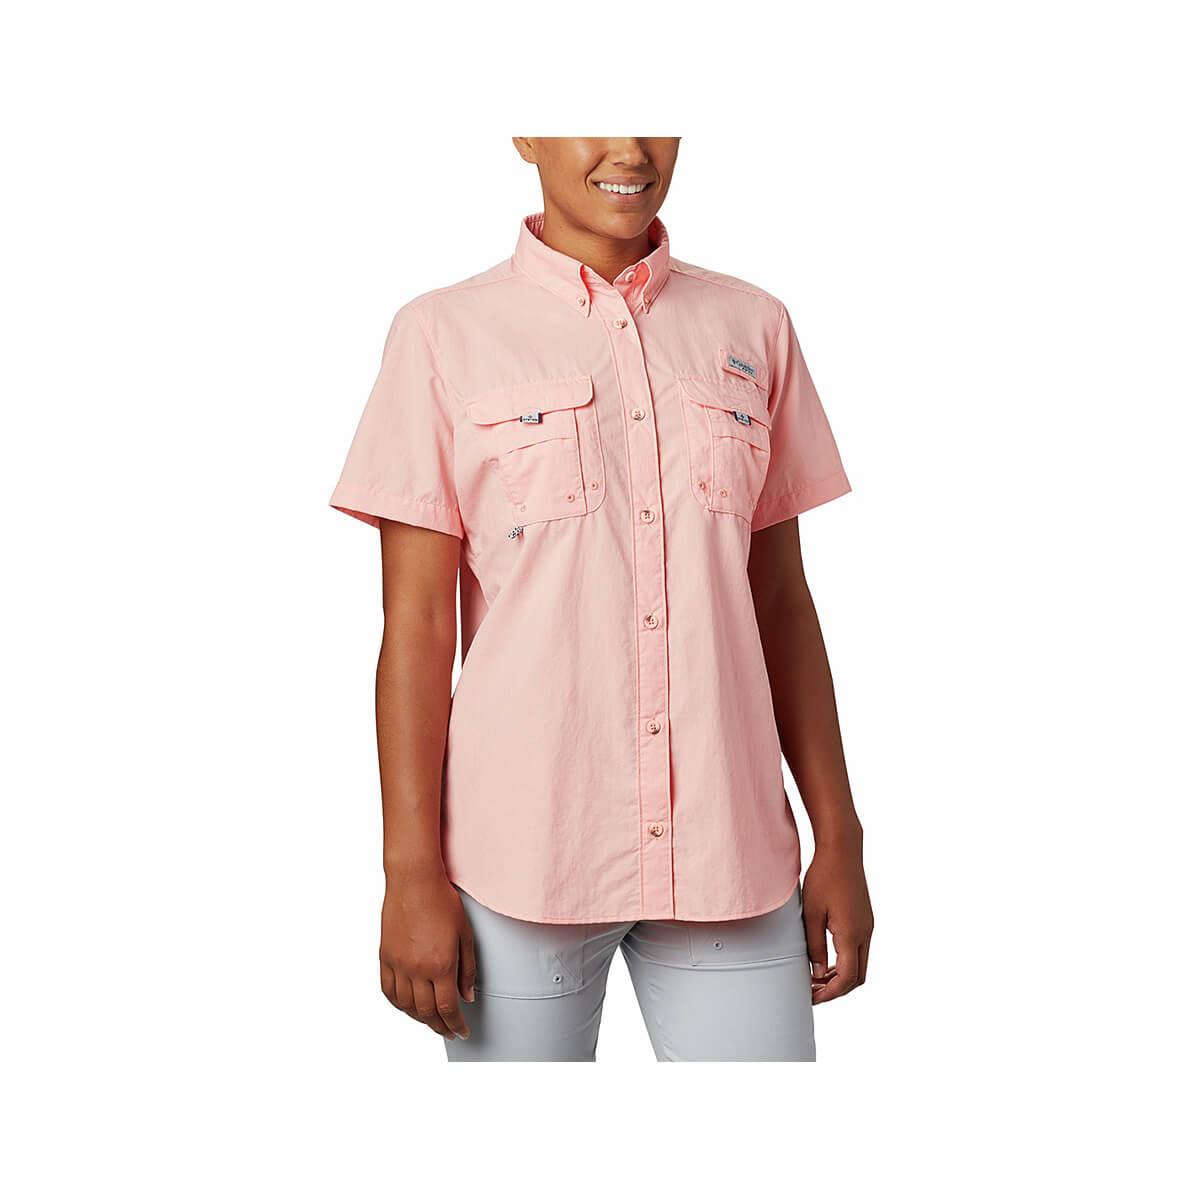  Women's Pfg Bahama Short Sleeve Shirt